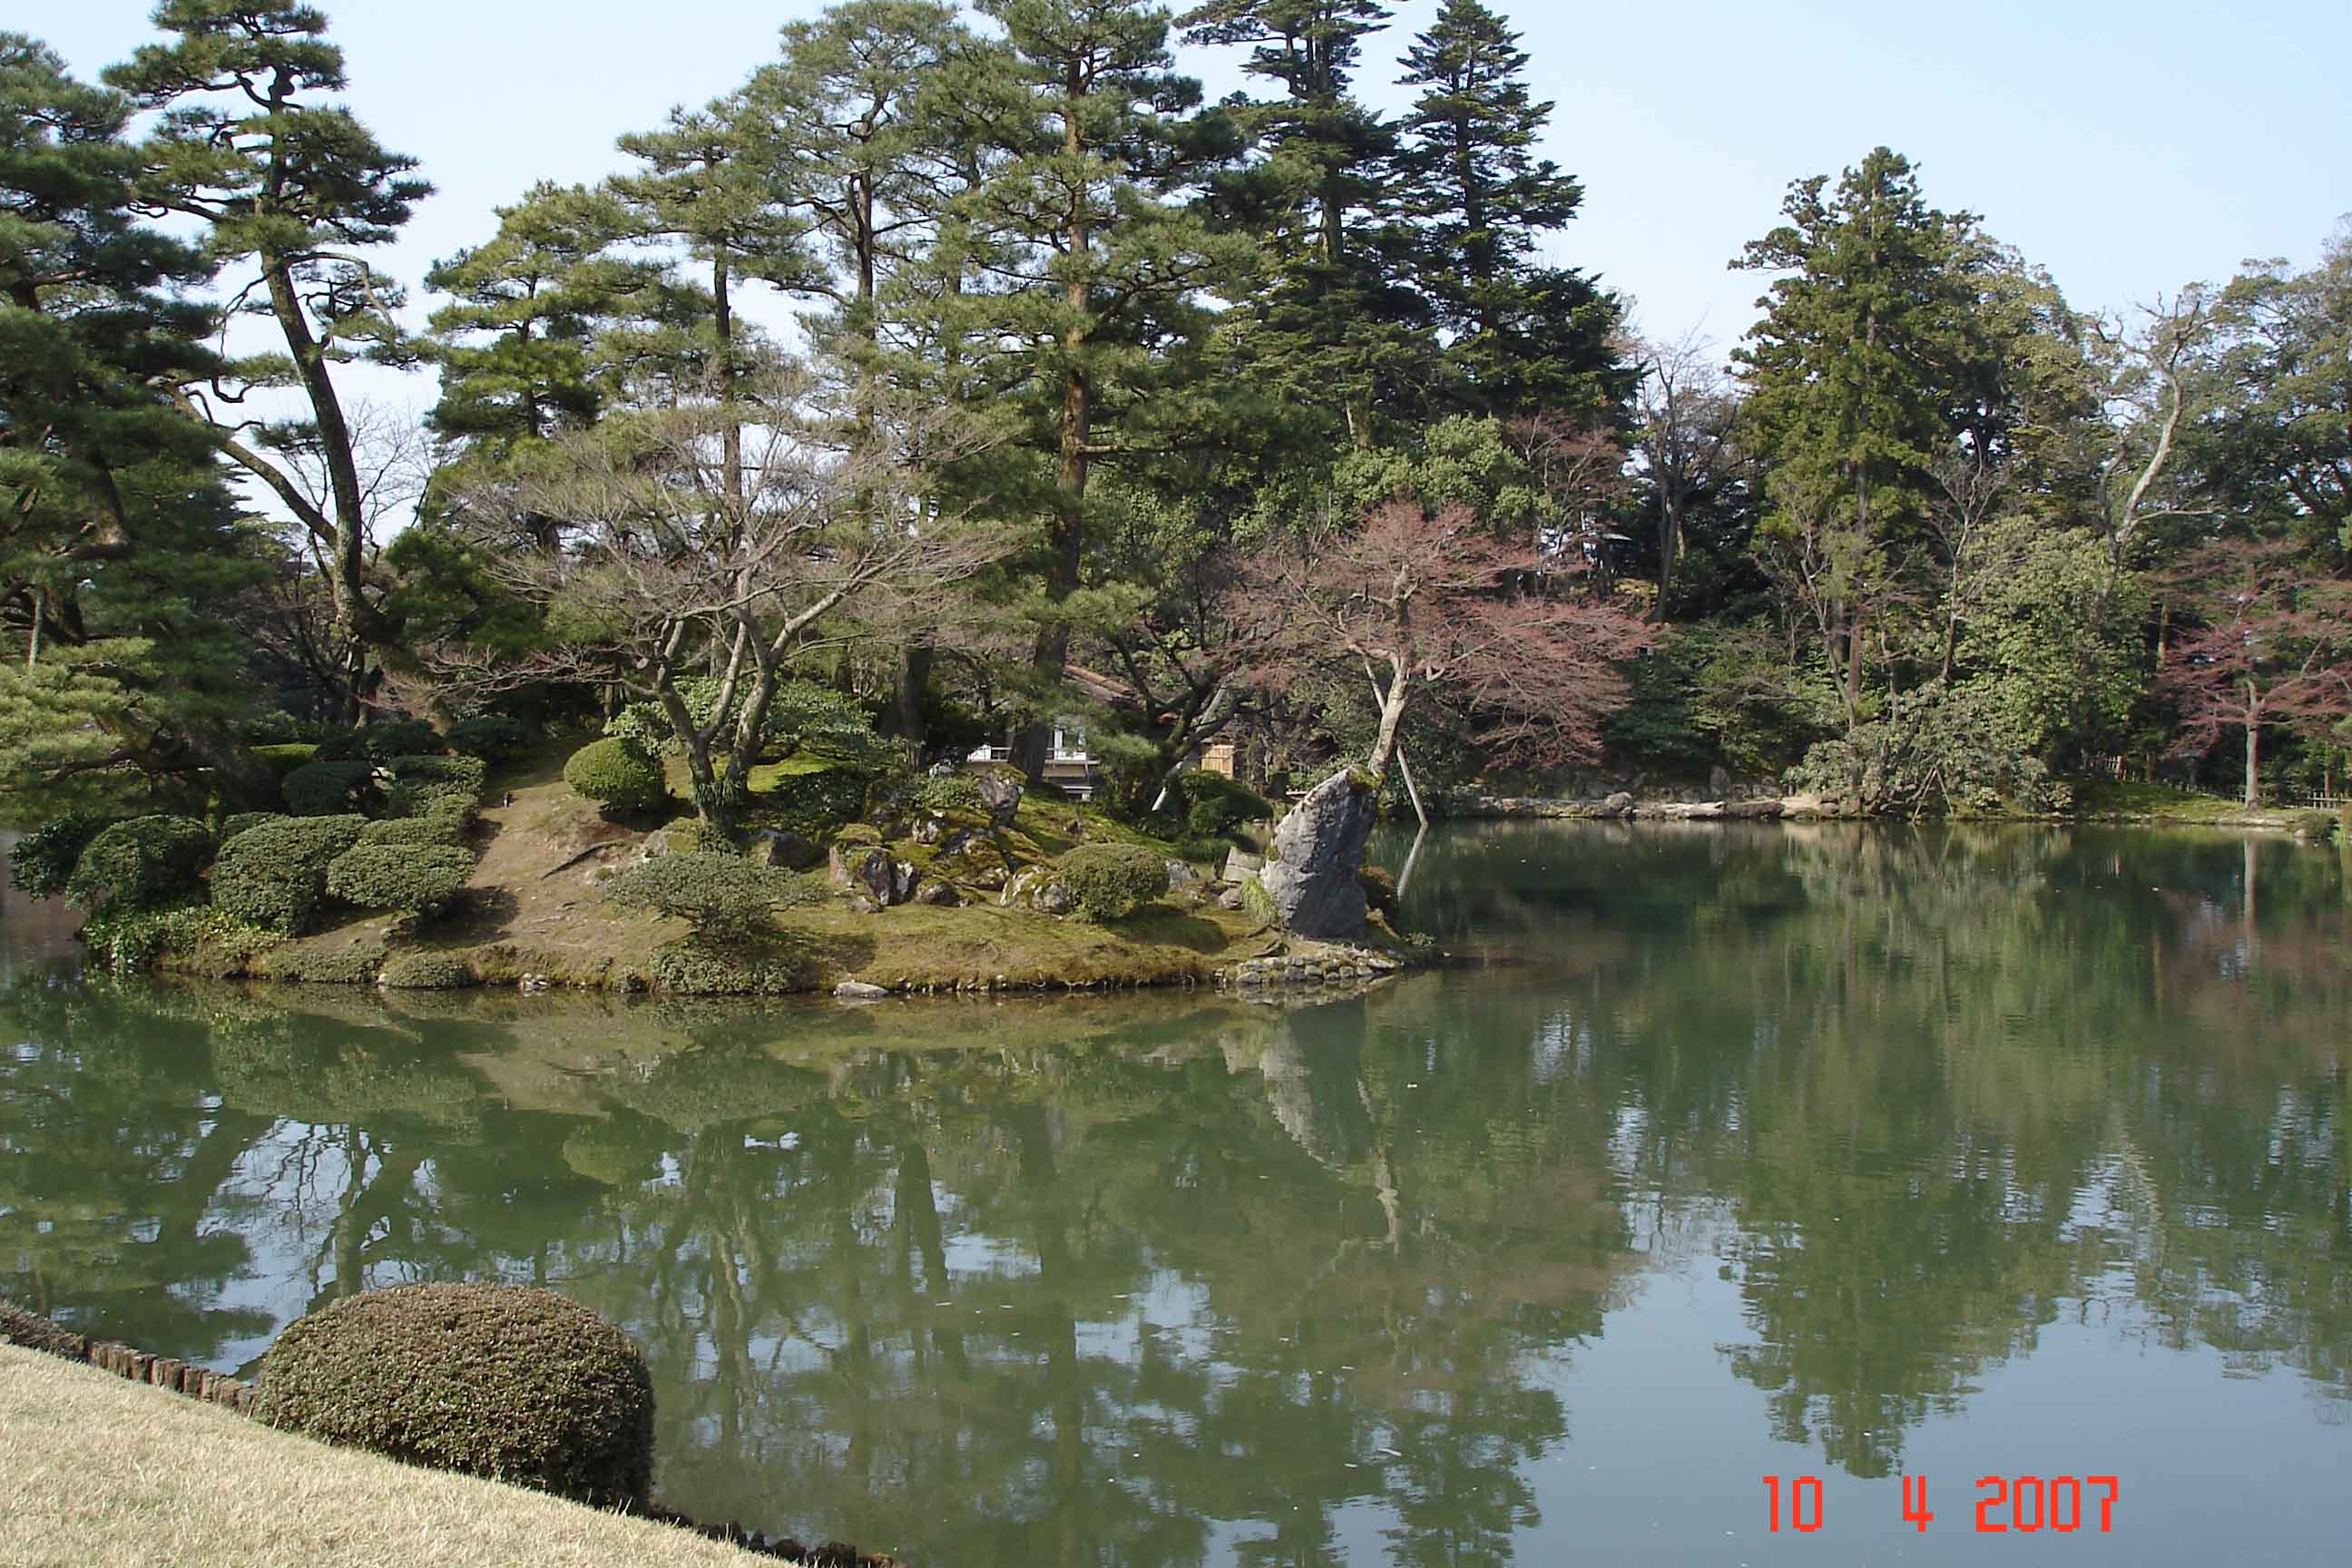 Kasumigaike Pond with Isle shaped like a tortoise - Kenrokuen Park, Kanazawa